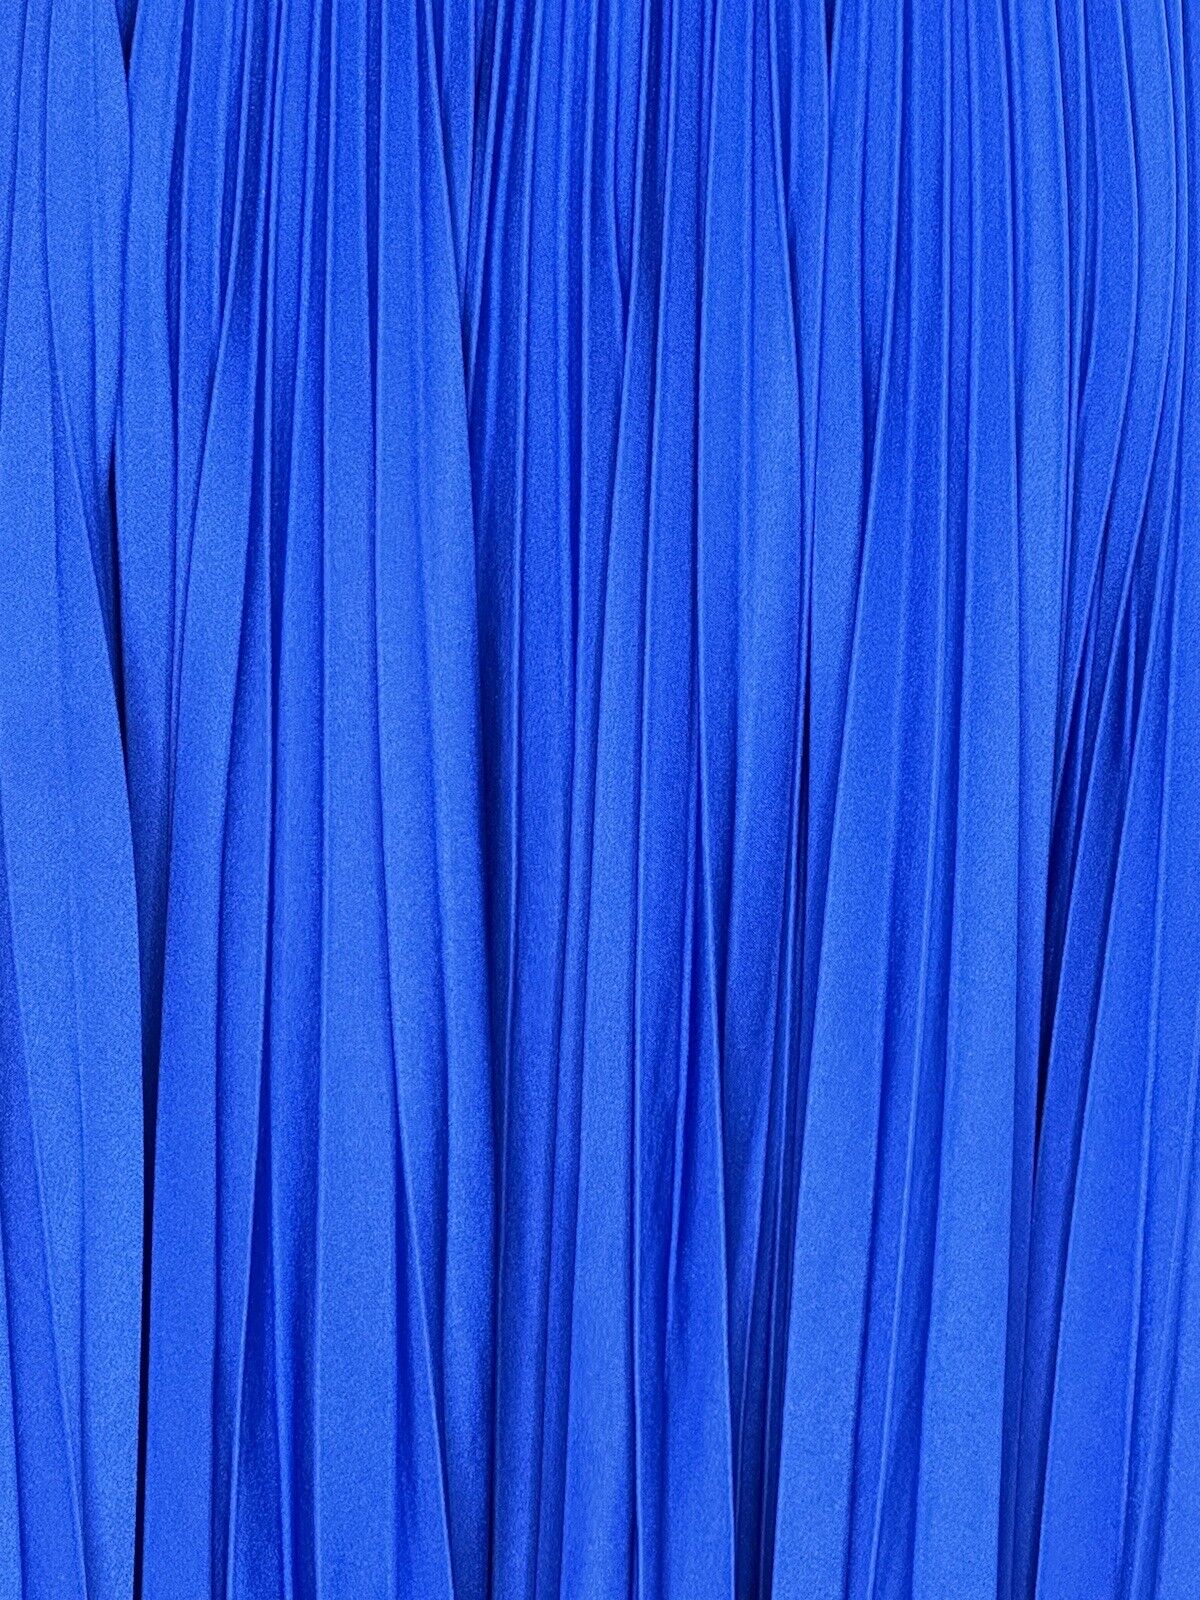 Luxurious Pleated midi satin blue skirt for Women elegant skirt - Brand new Unbranded - фотография #15